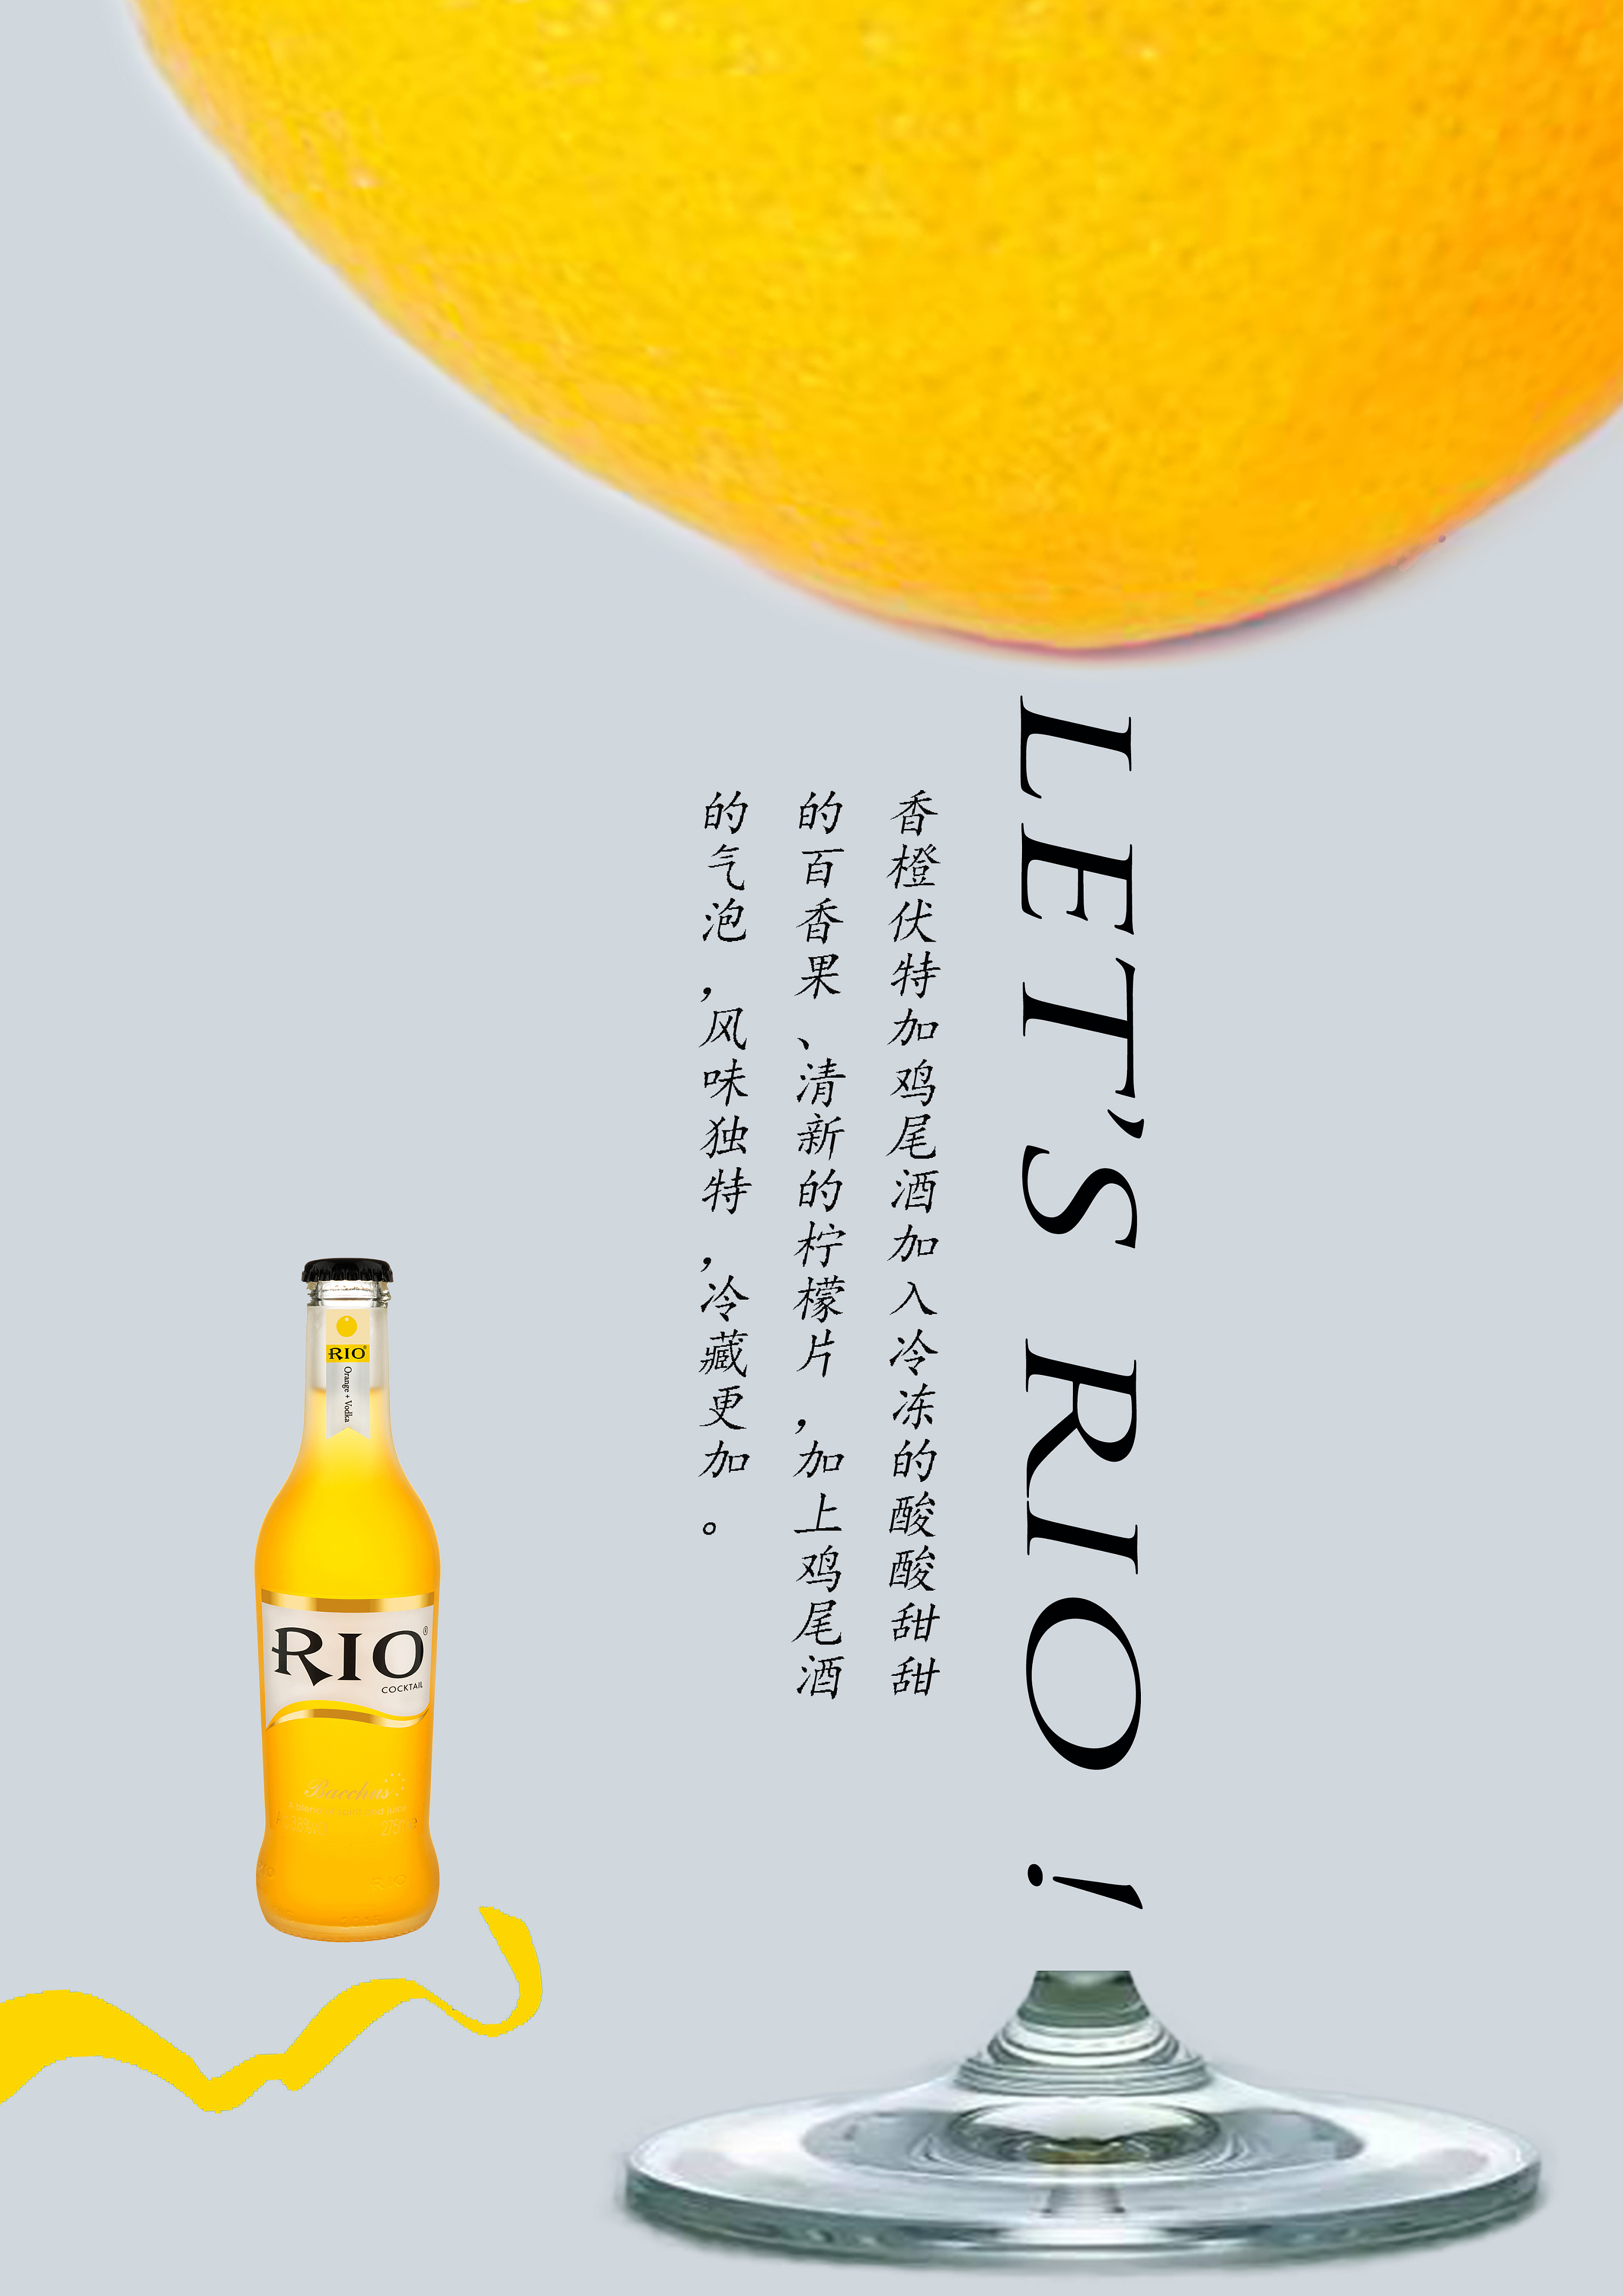 rio平面广告图片